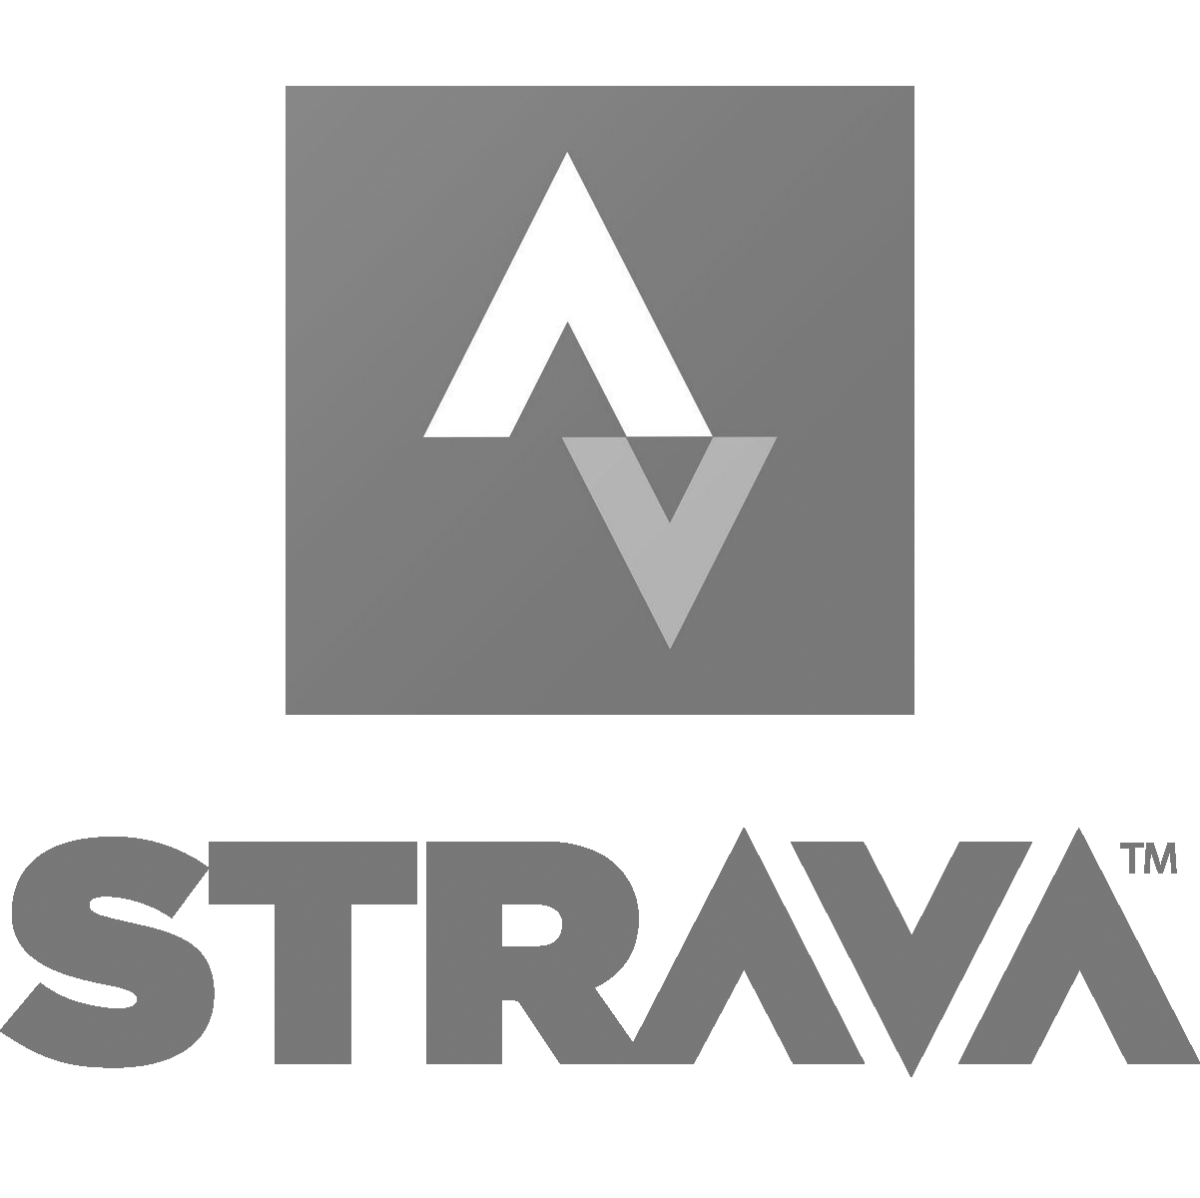 strava-logo-png-4.png